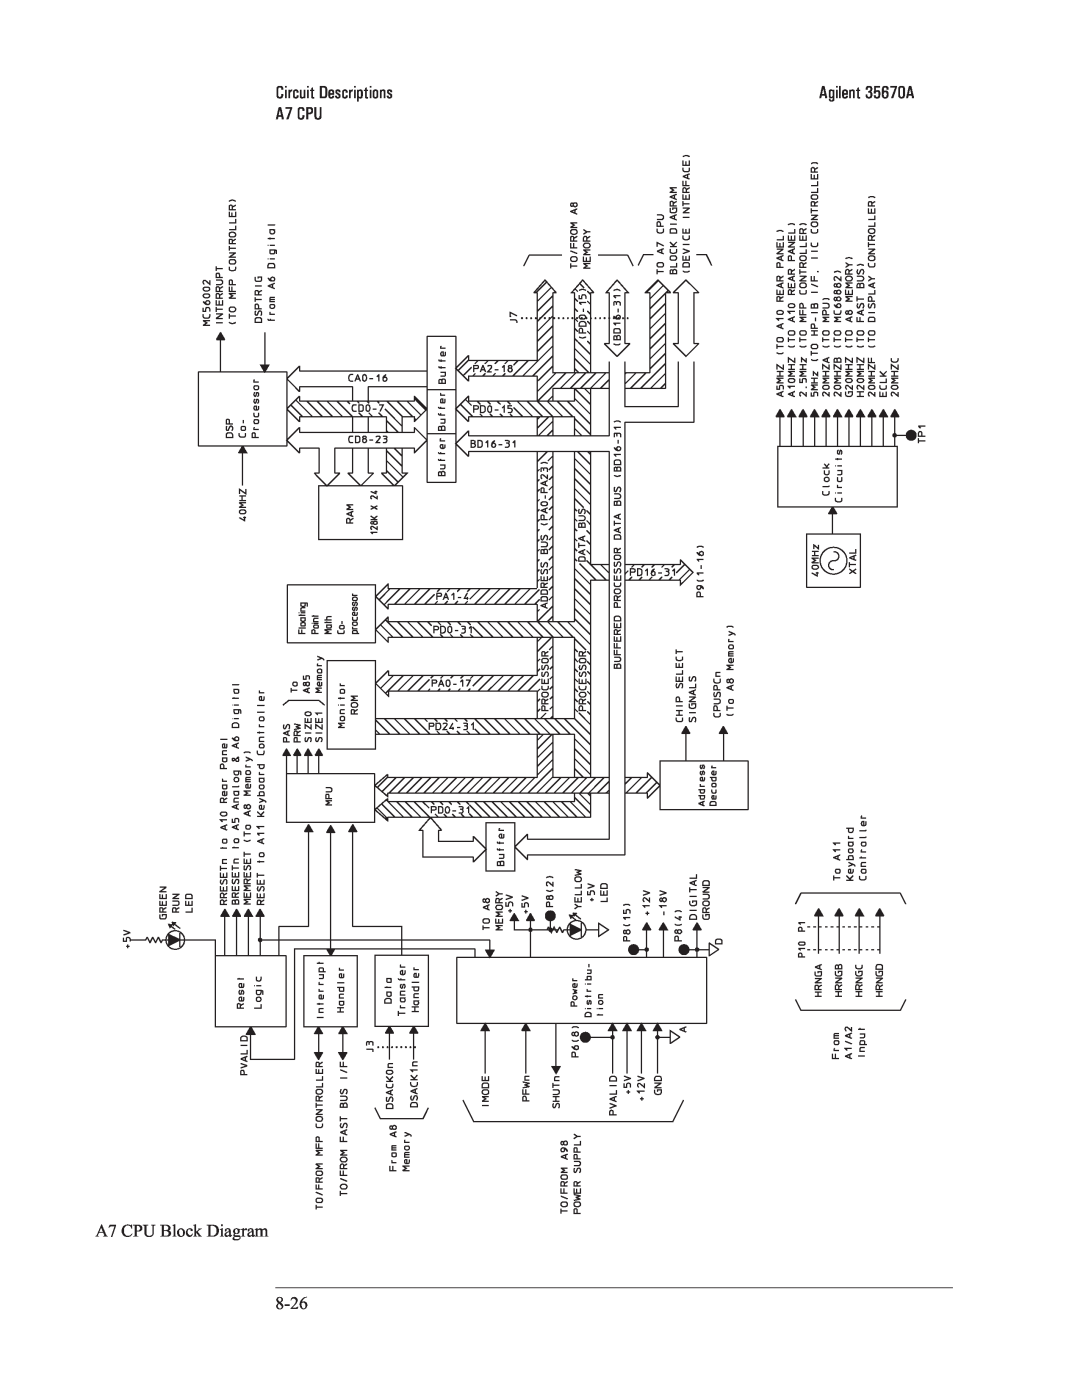 Agilent Technologies 35670-90066 manual Circuit Descriptions, A7 CPU Block Diagram, Agilent 35670A 